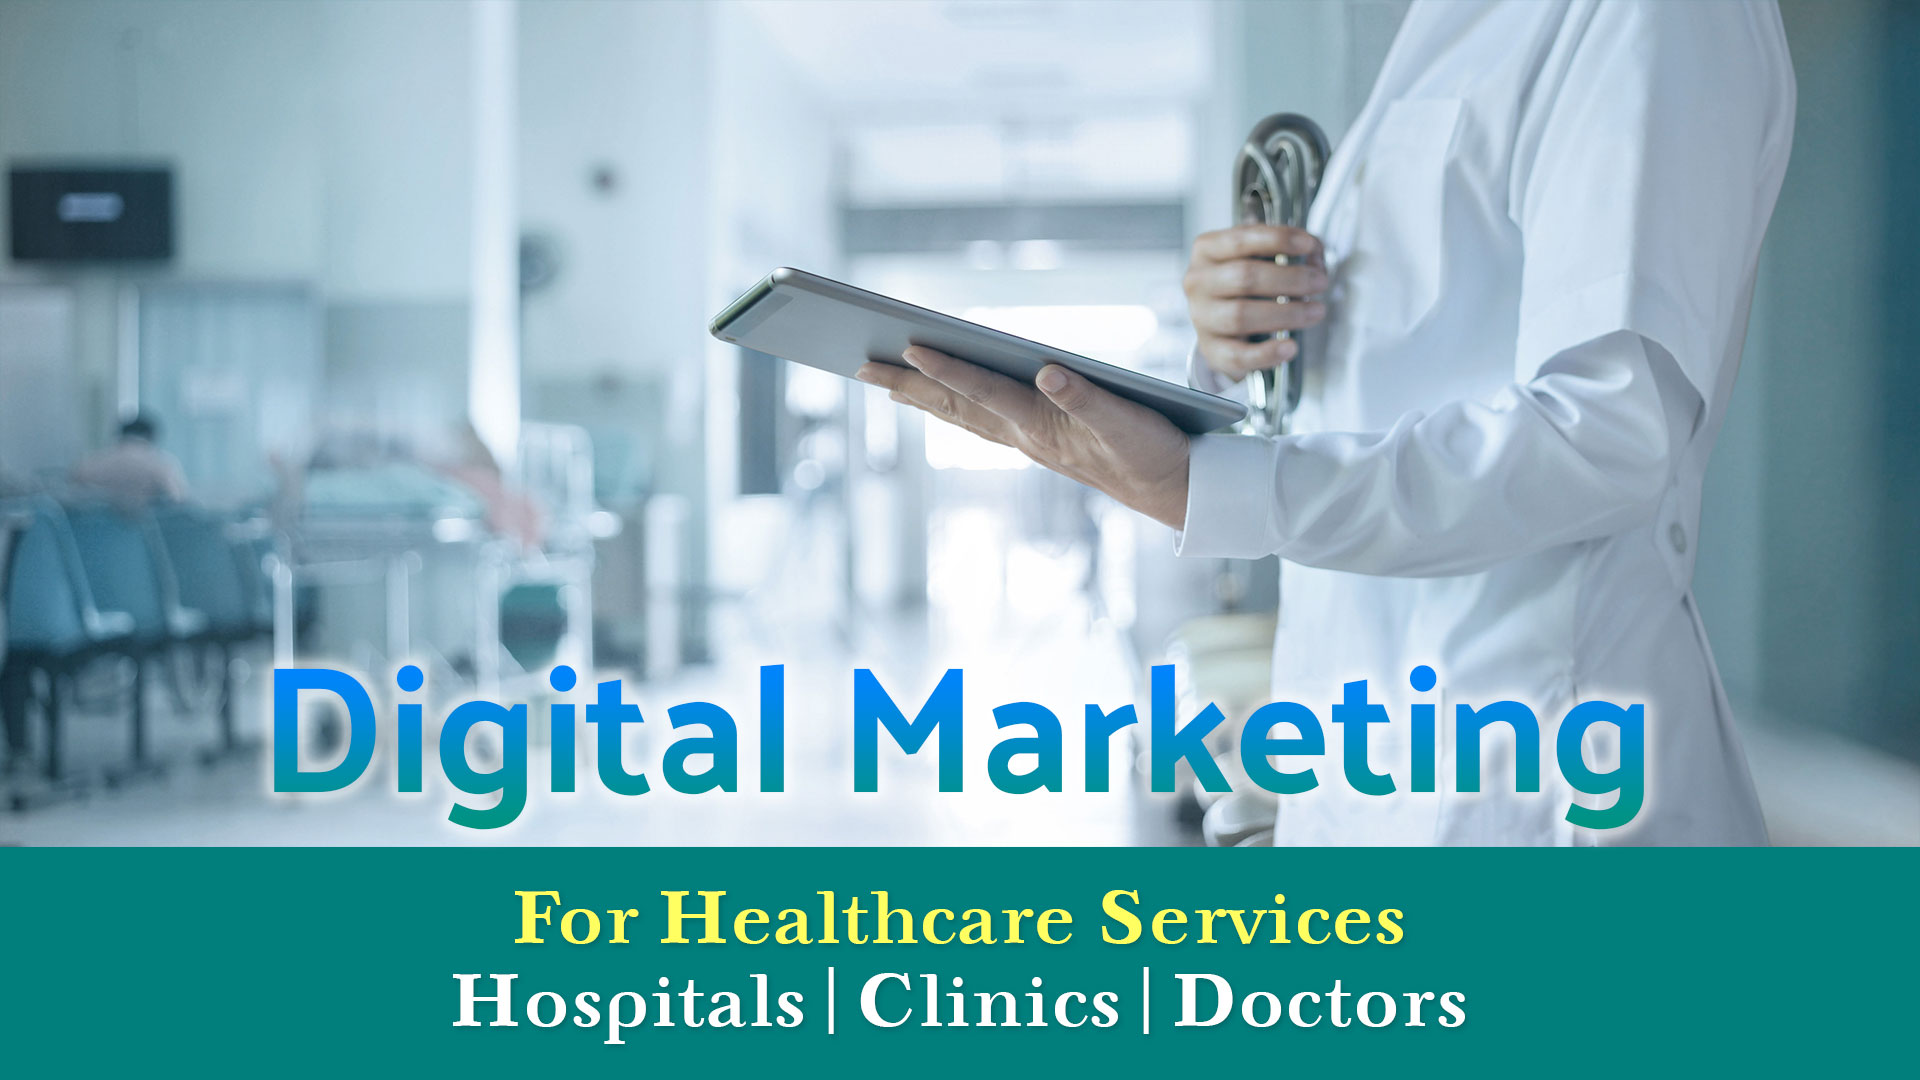 Digital Marketing For Healthcare Services Hospitals Clinics Doctors